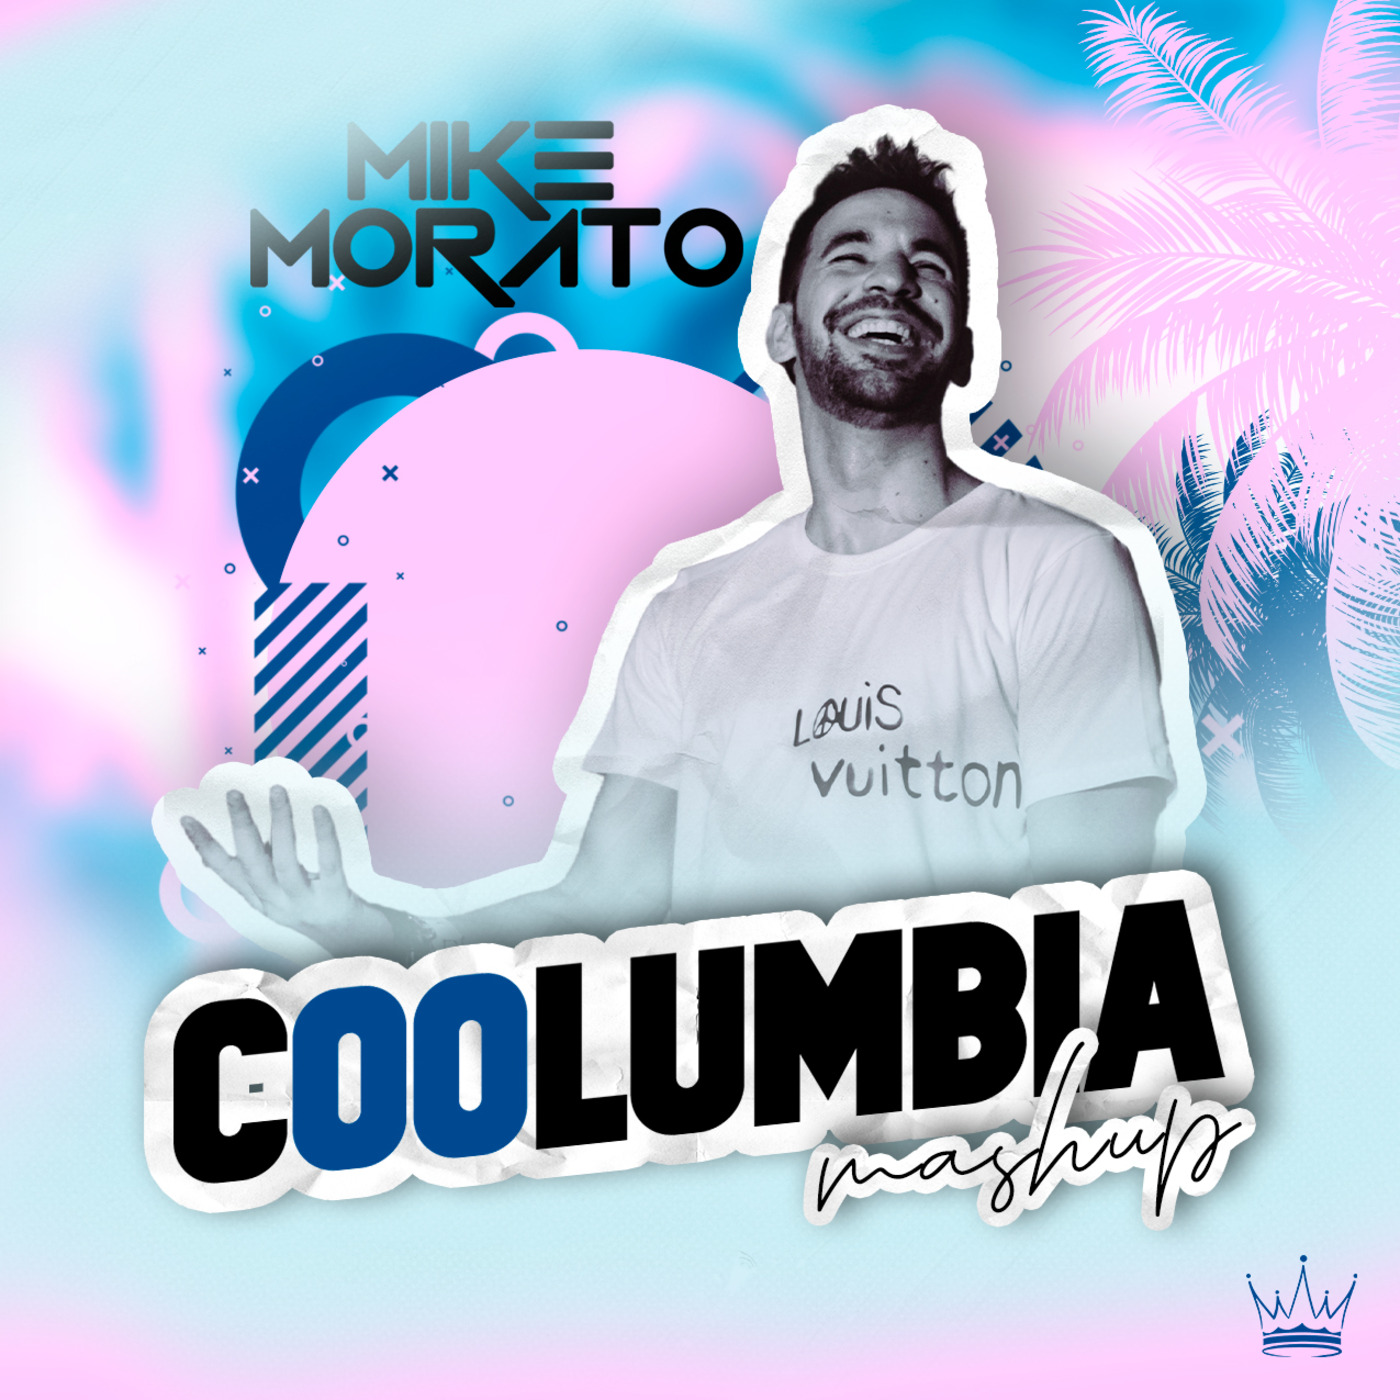 Mike Morato - Coolumbia (Mashup)